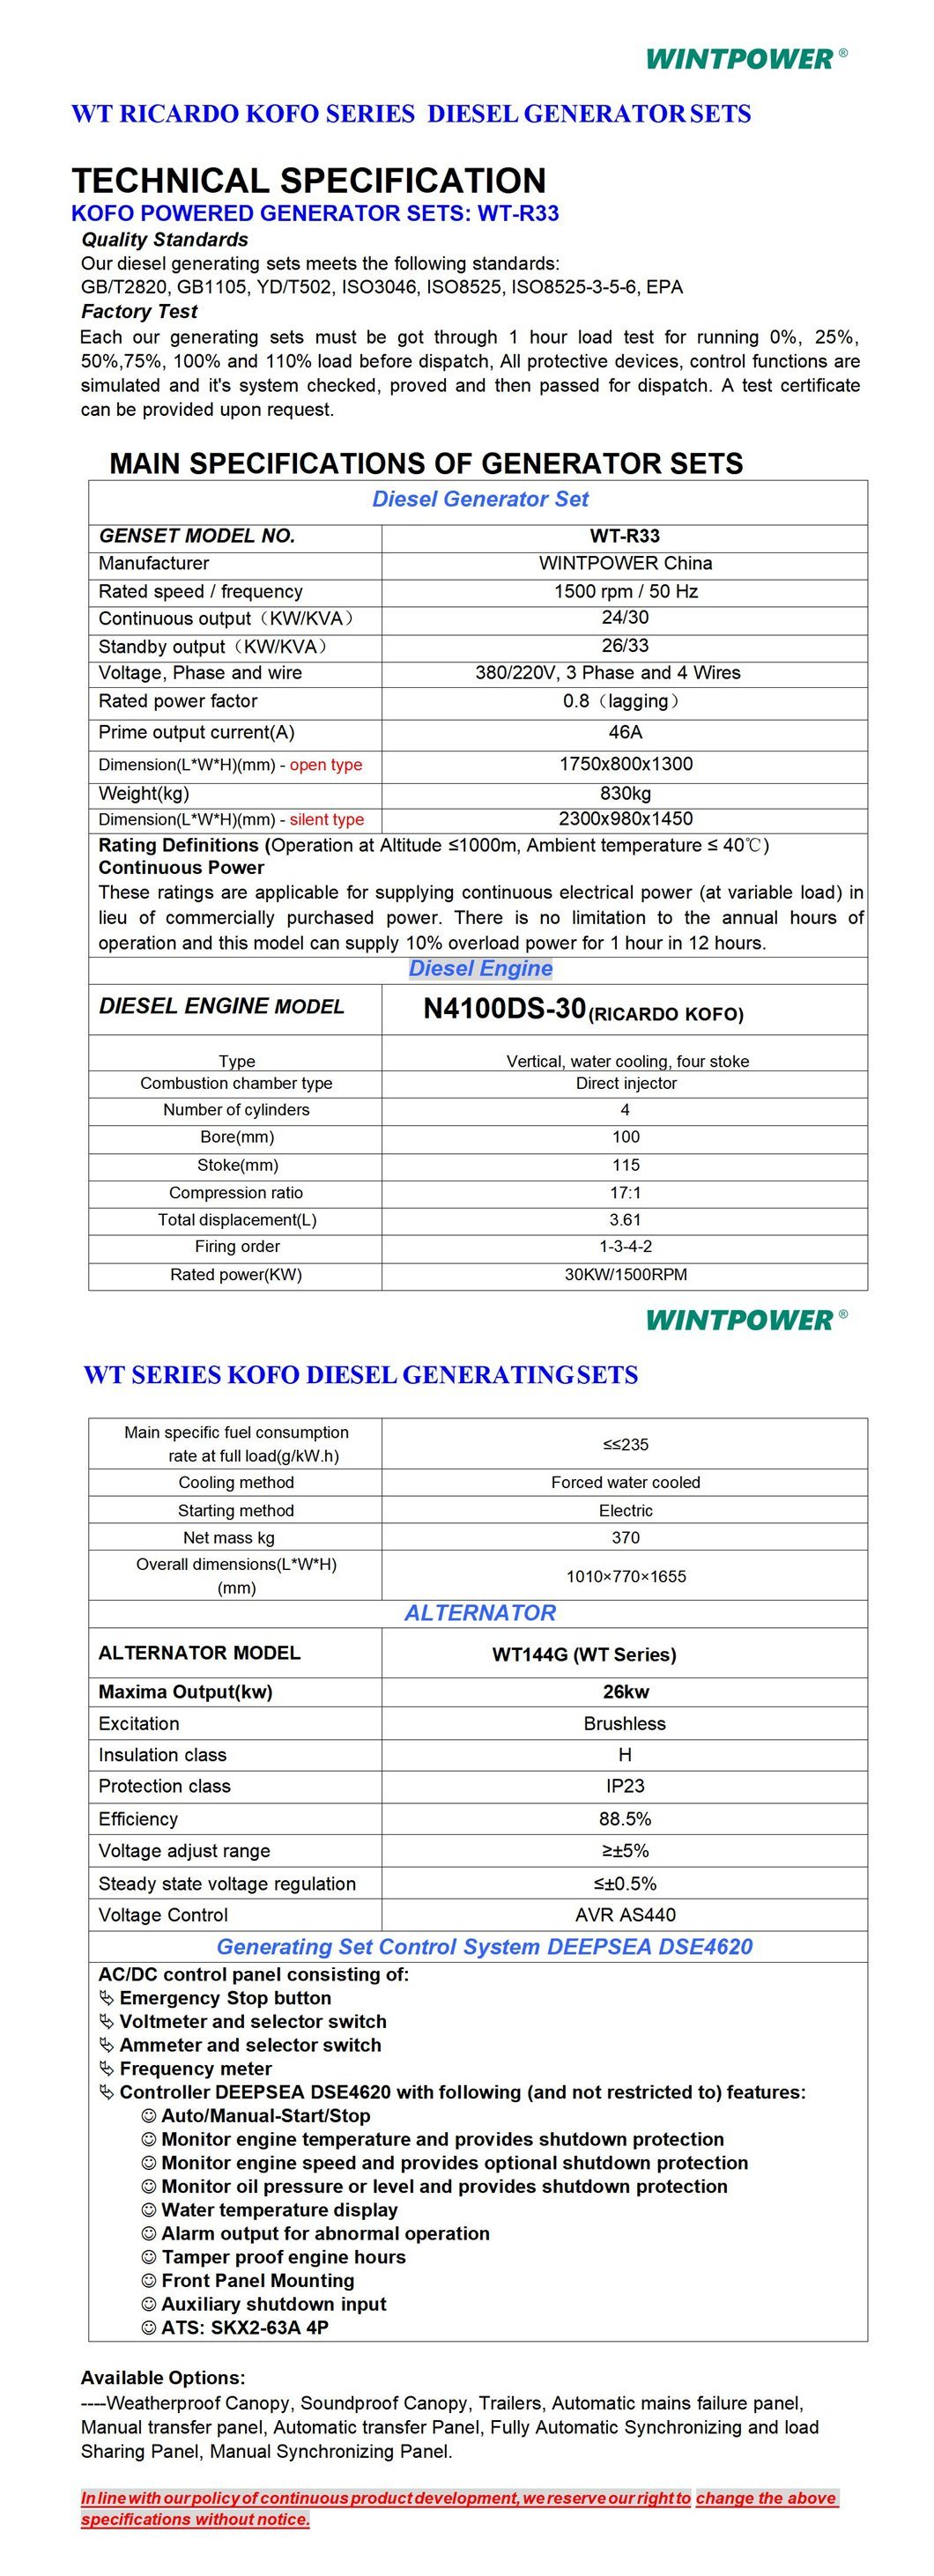 Weichai Kofo Ricardo Diesel Motor Generator Set Dg Genset 120kVA 4rt55-110d soundproof Silent Type 400/230V 380/220V 208/110V 440V 480V 600V 50Hz 60Hz